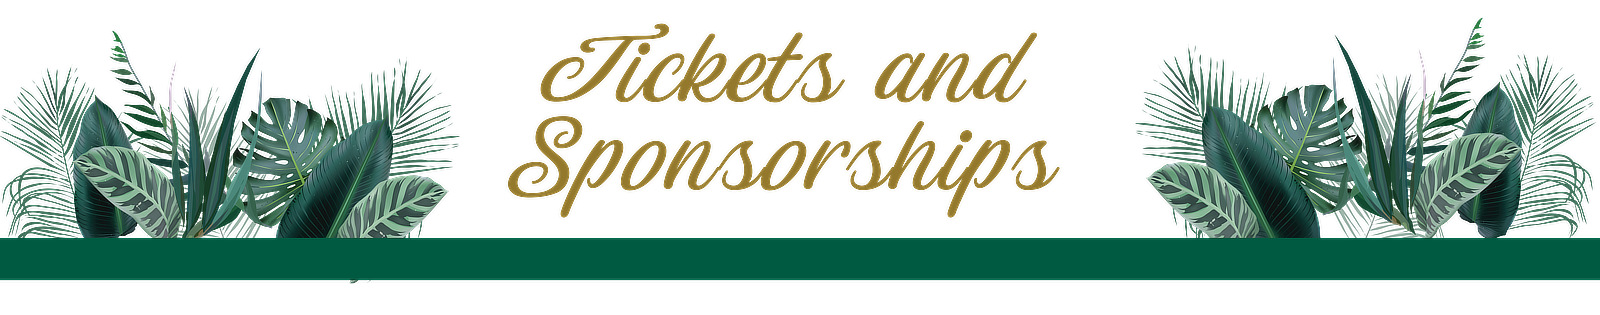 Tickets-and-Sponsorship2.jpg